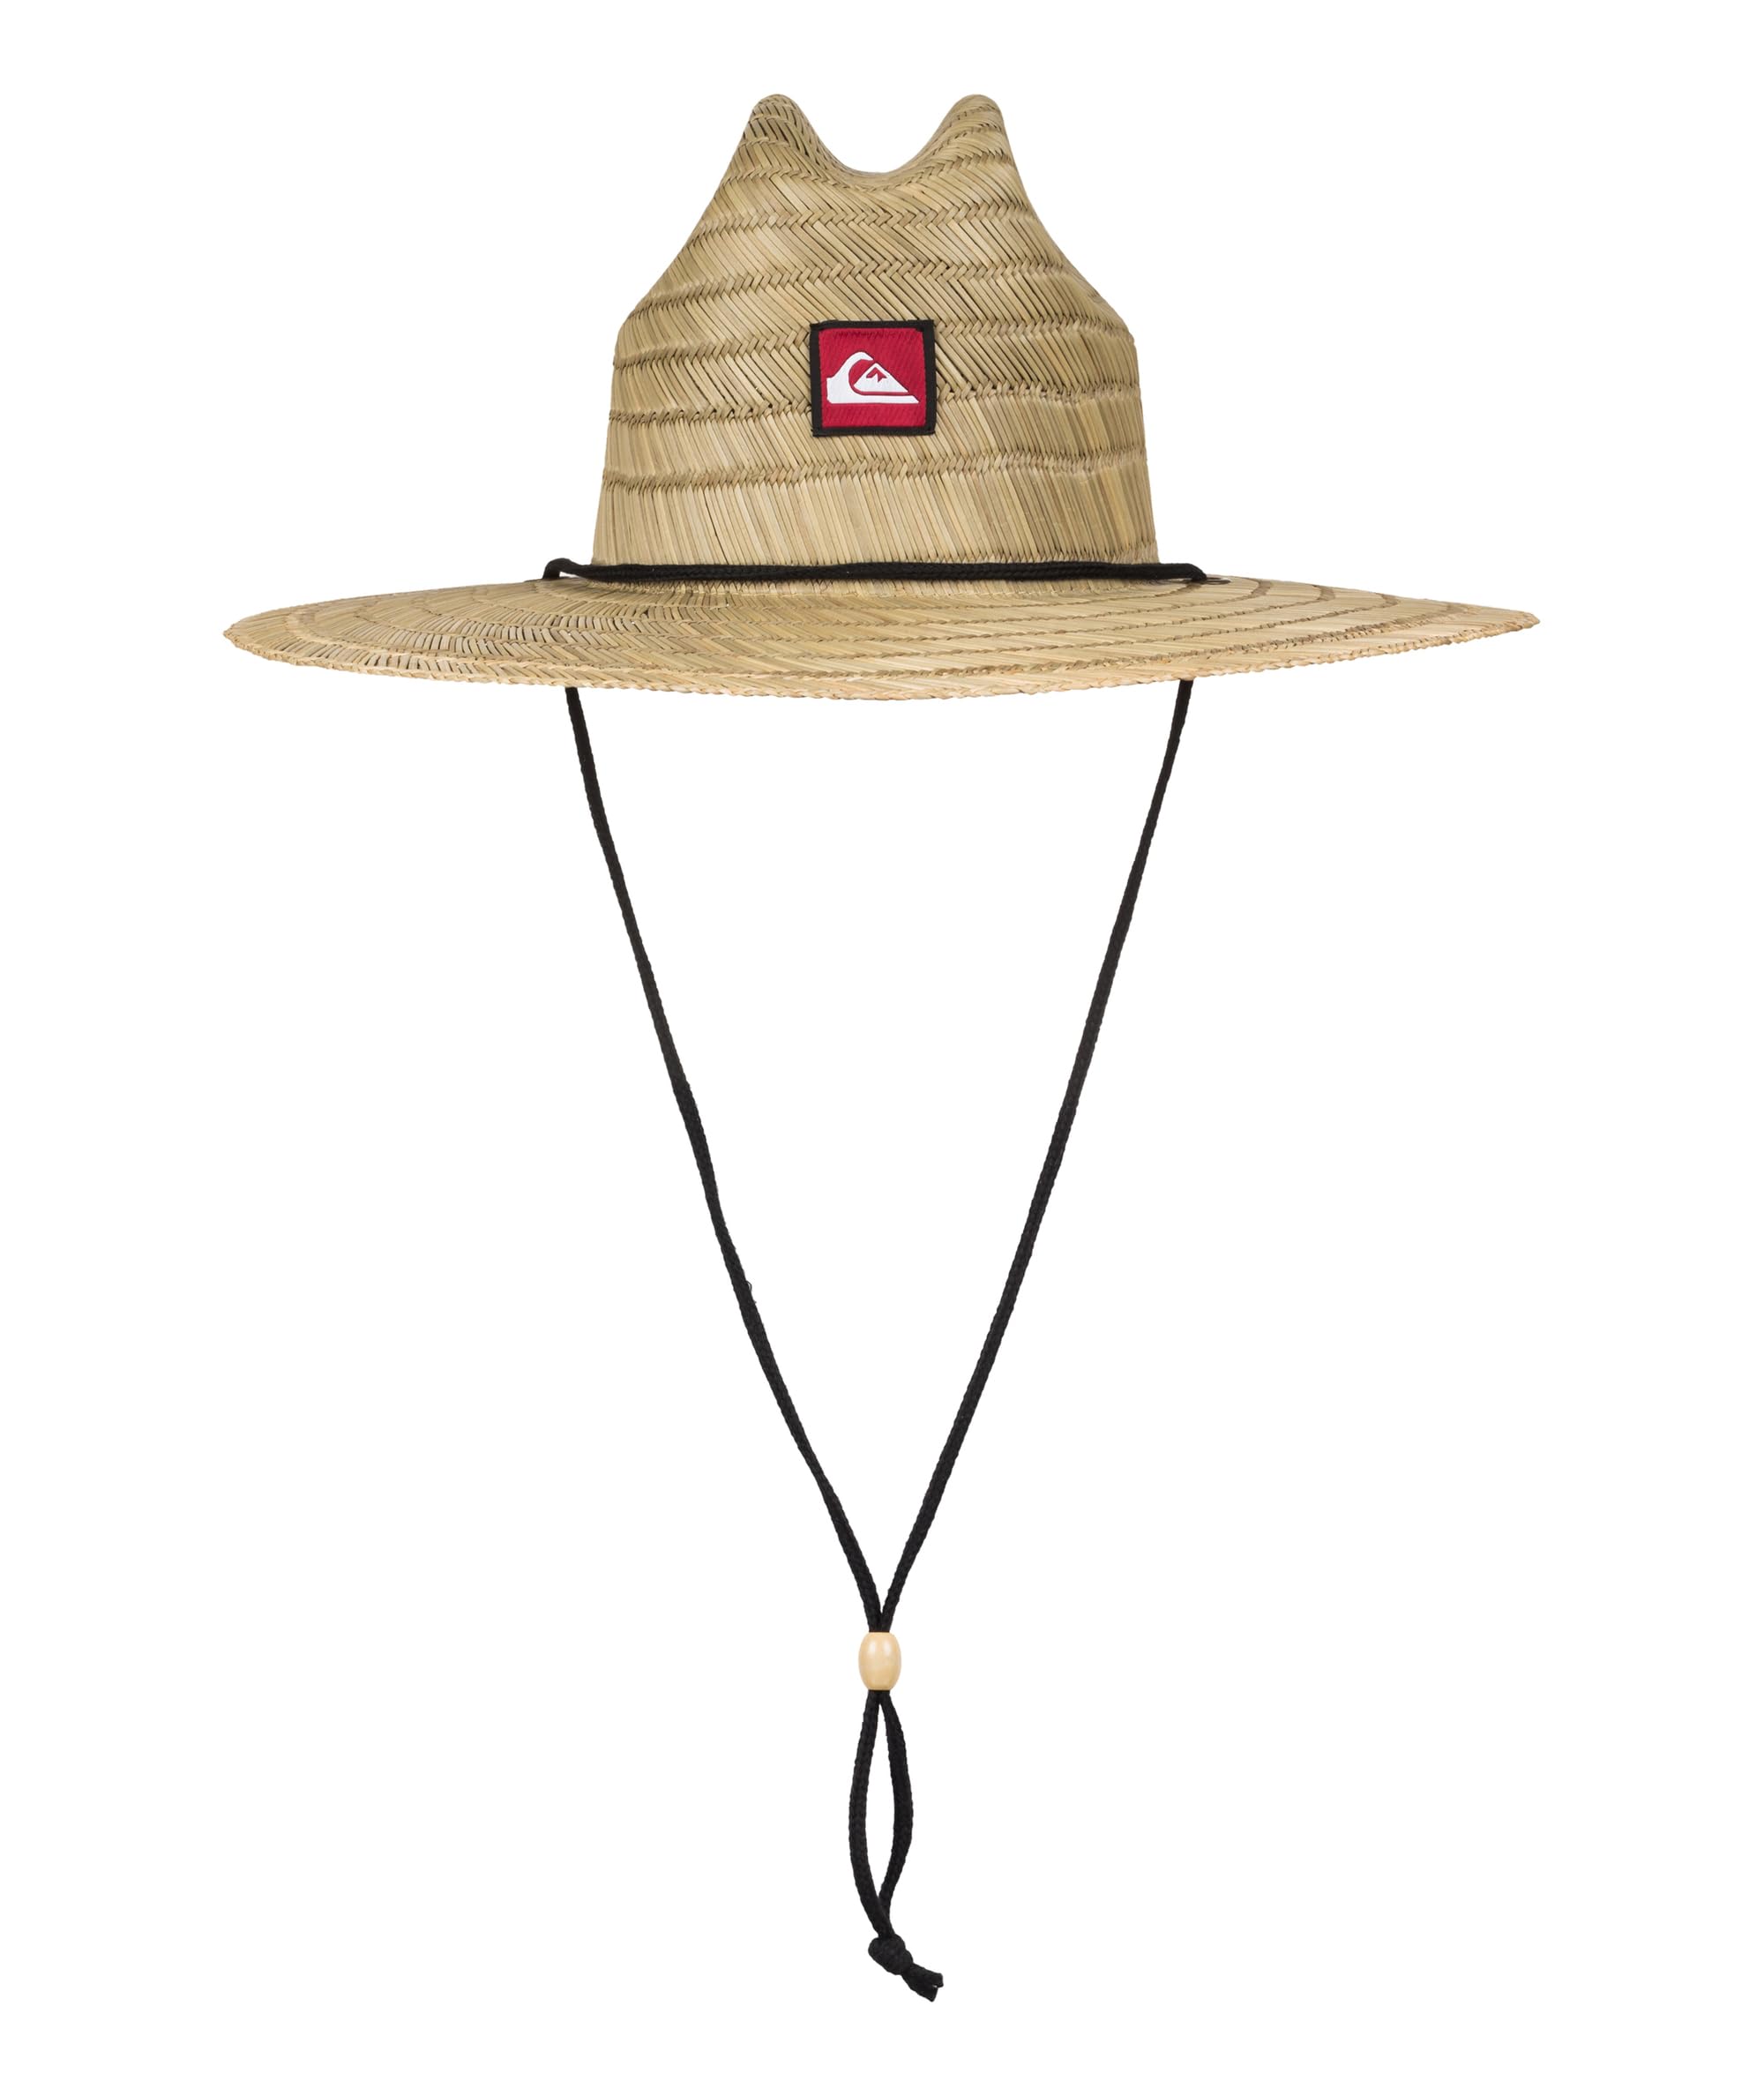 Quiksilver Men's Pierside Lifeguard Beach Sun Straw Hat